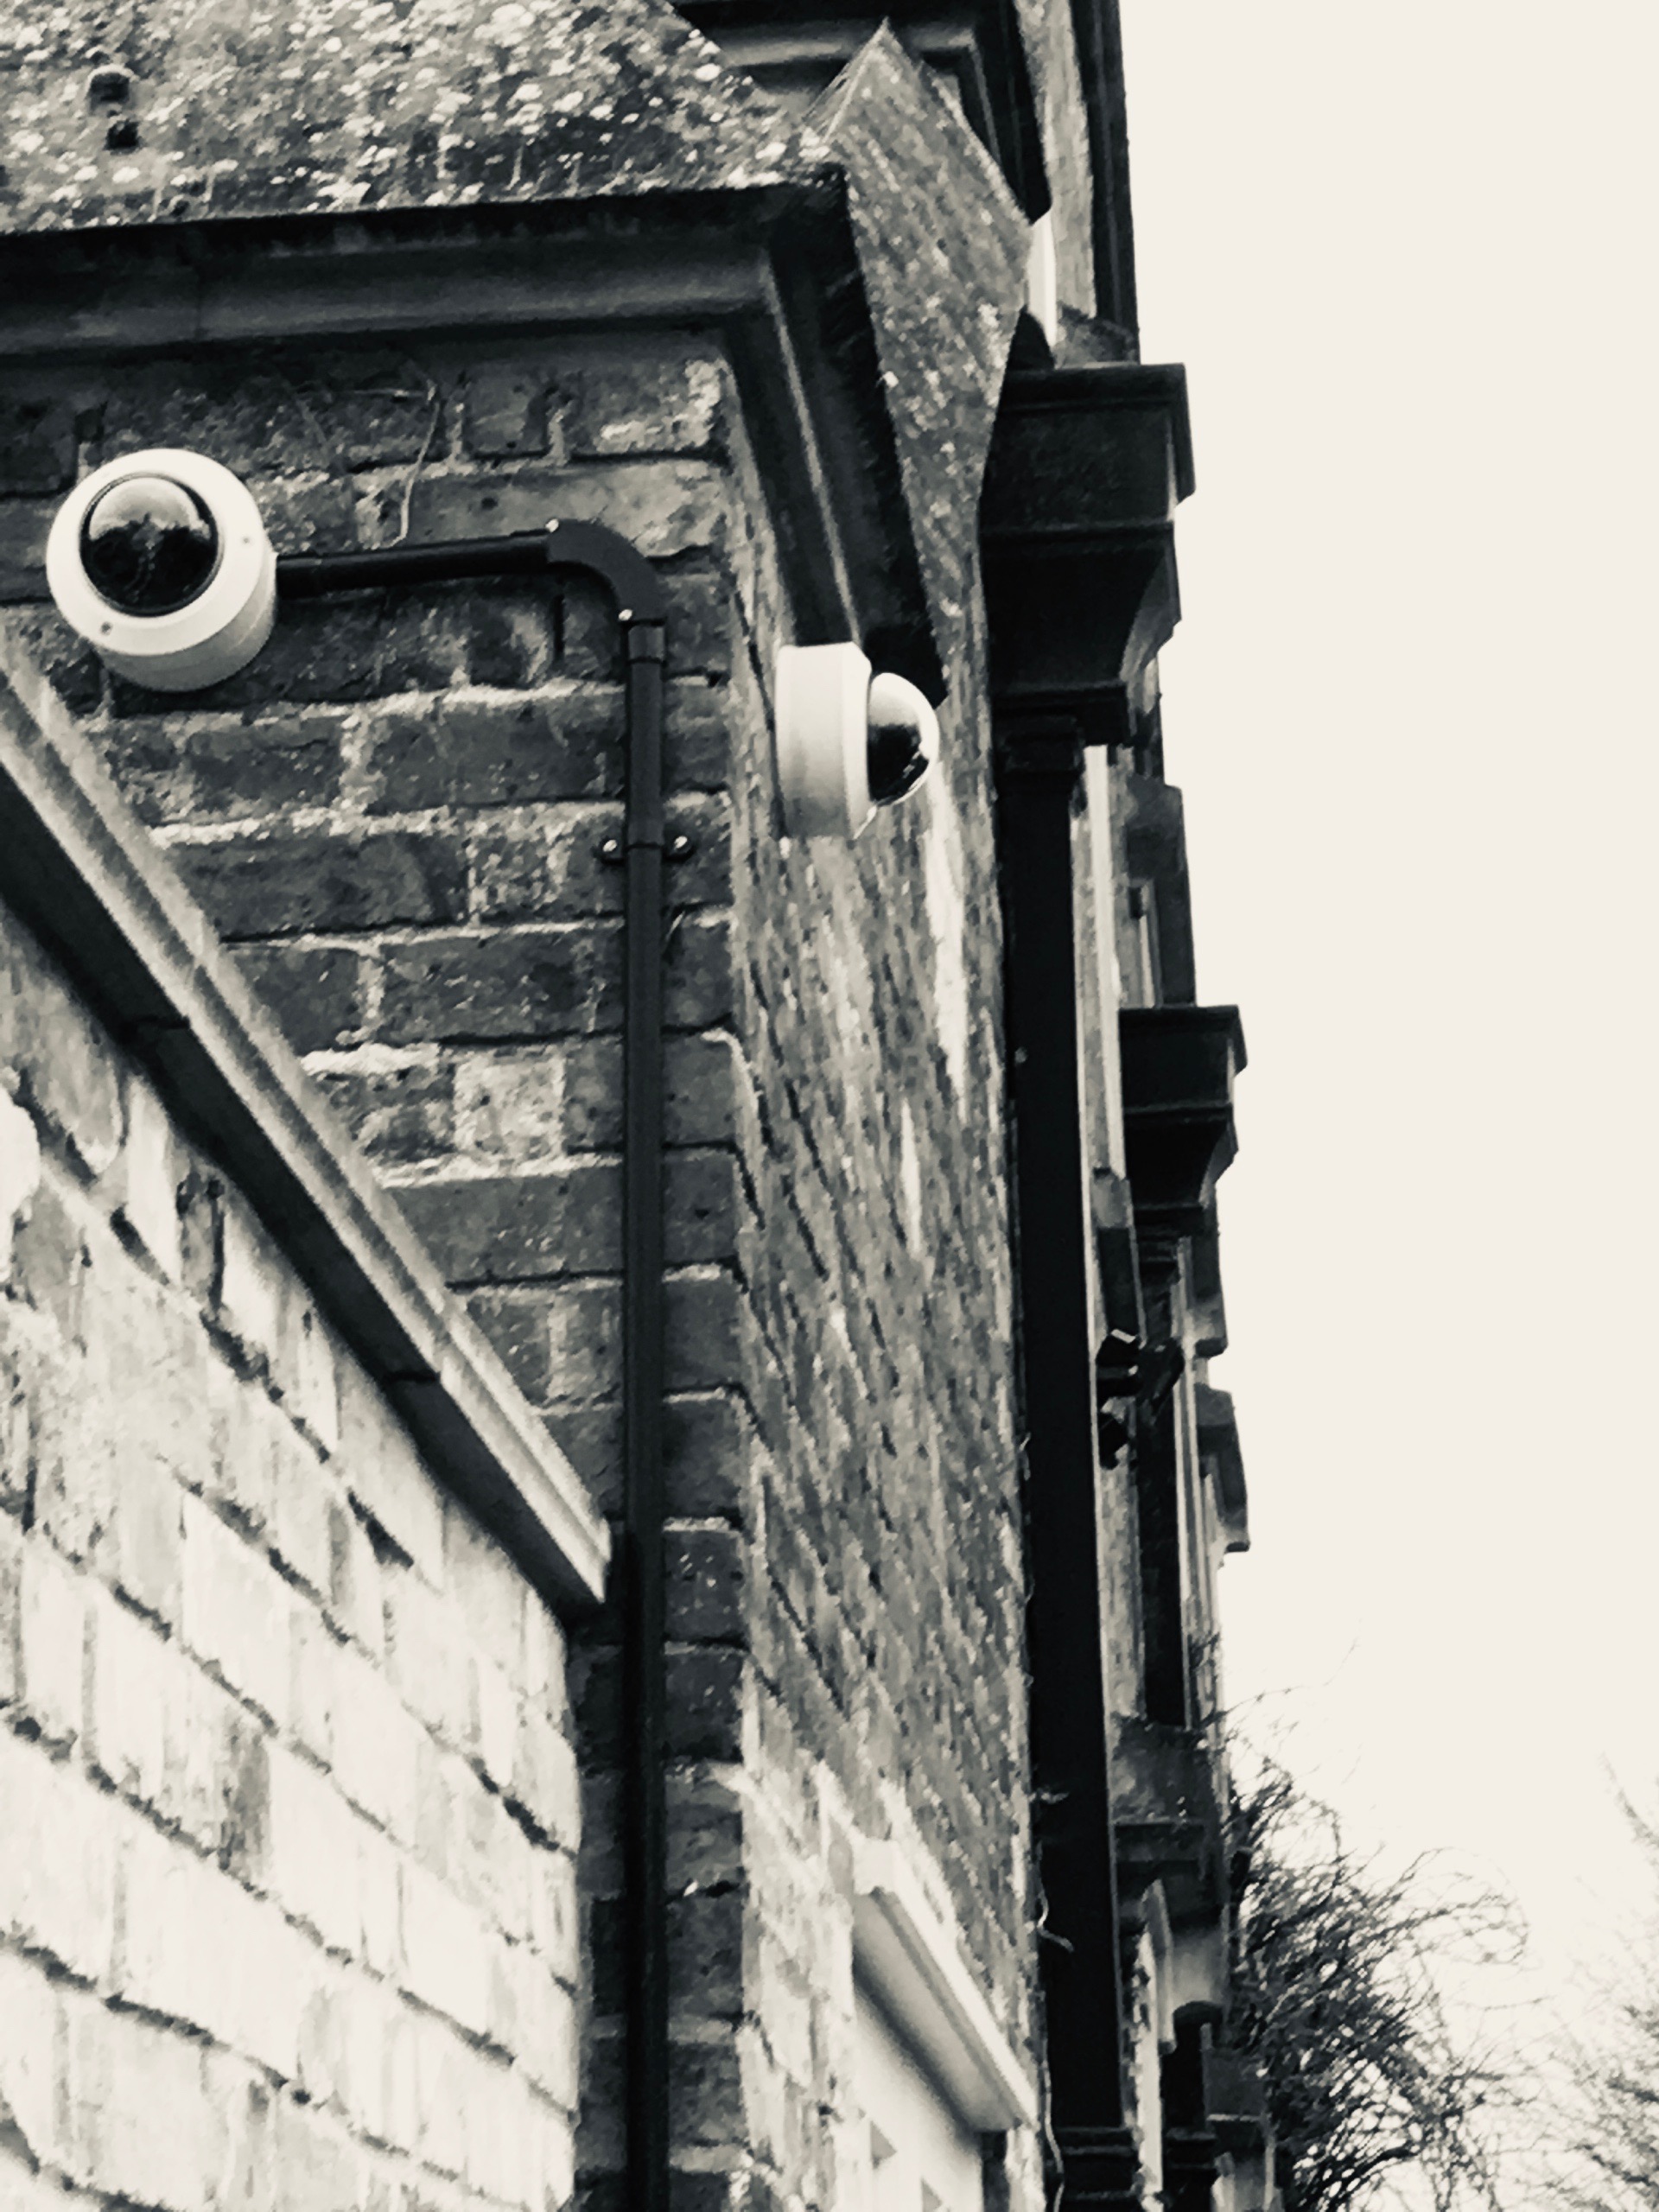 CCTV for Hotels